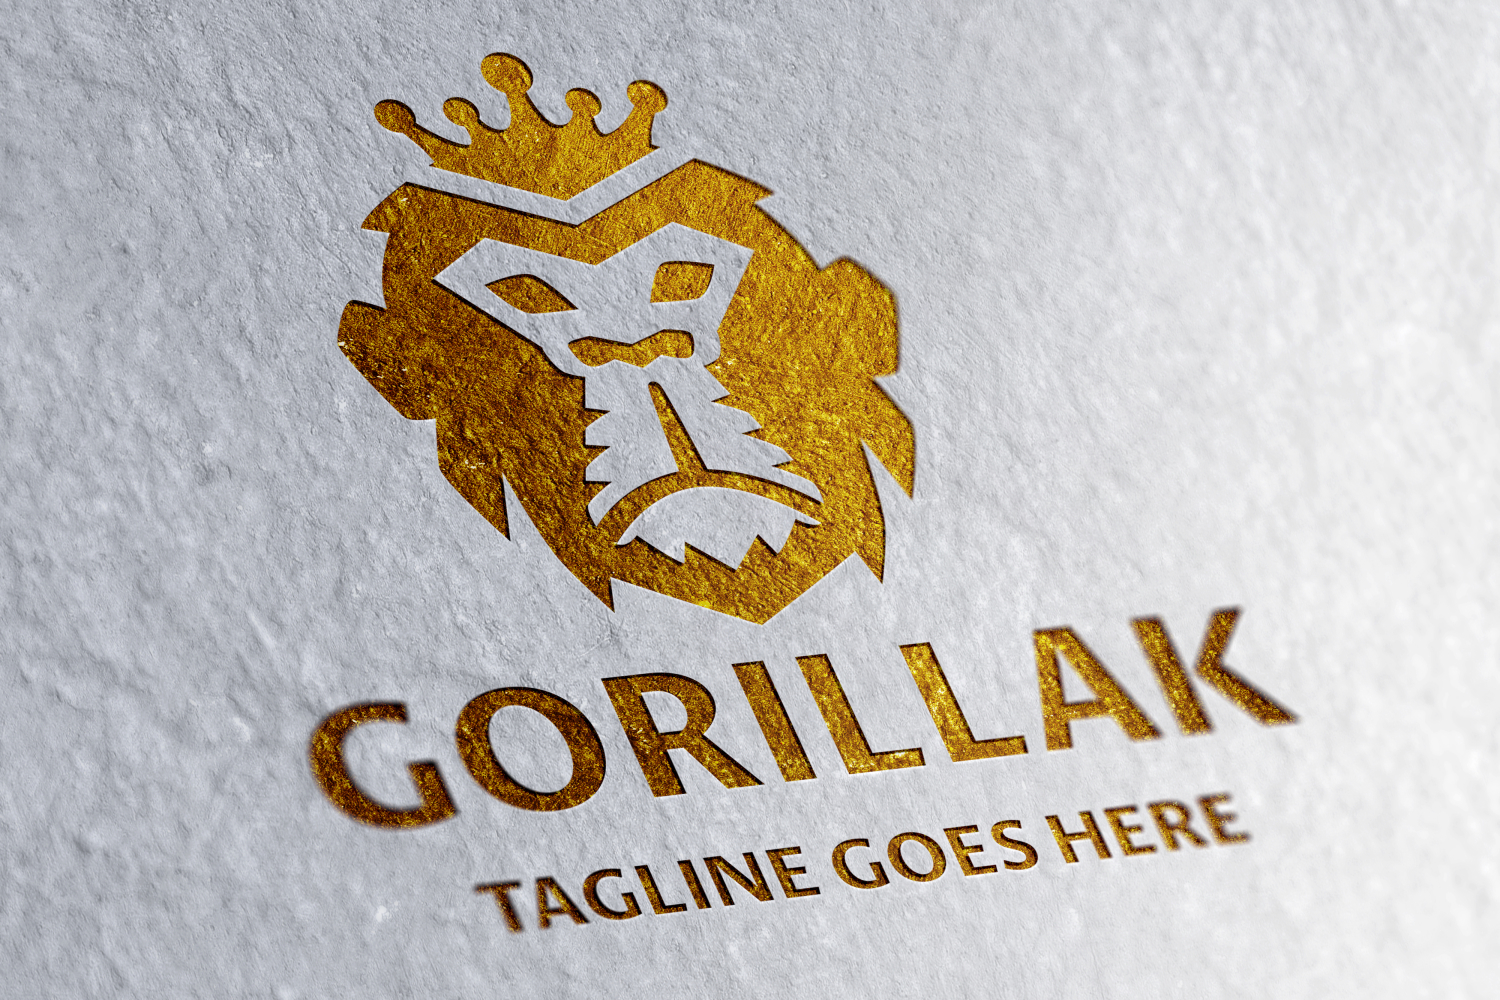 Gorillak Logo Template